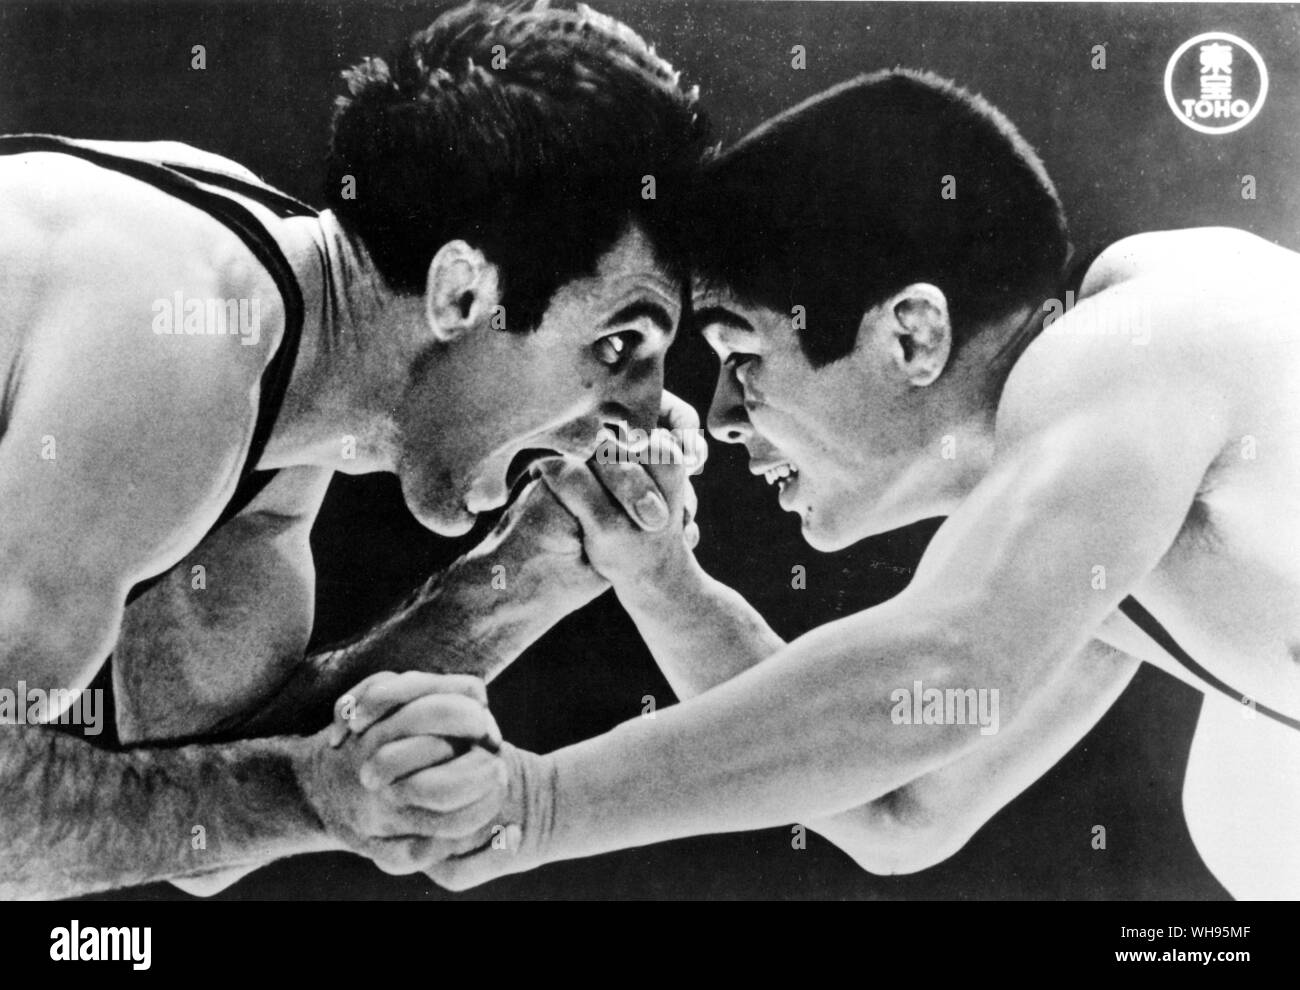 Japan, Tokyo Olympics, 1964: Wrestling (athletes unidentified) Stock Photo